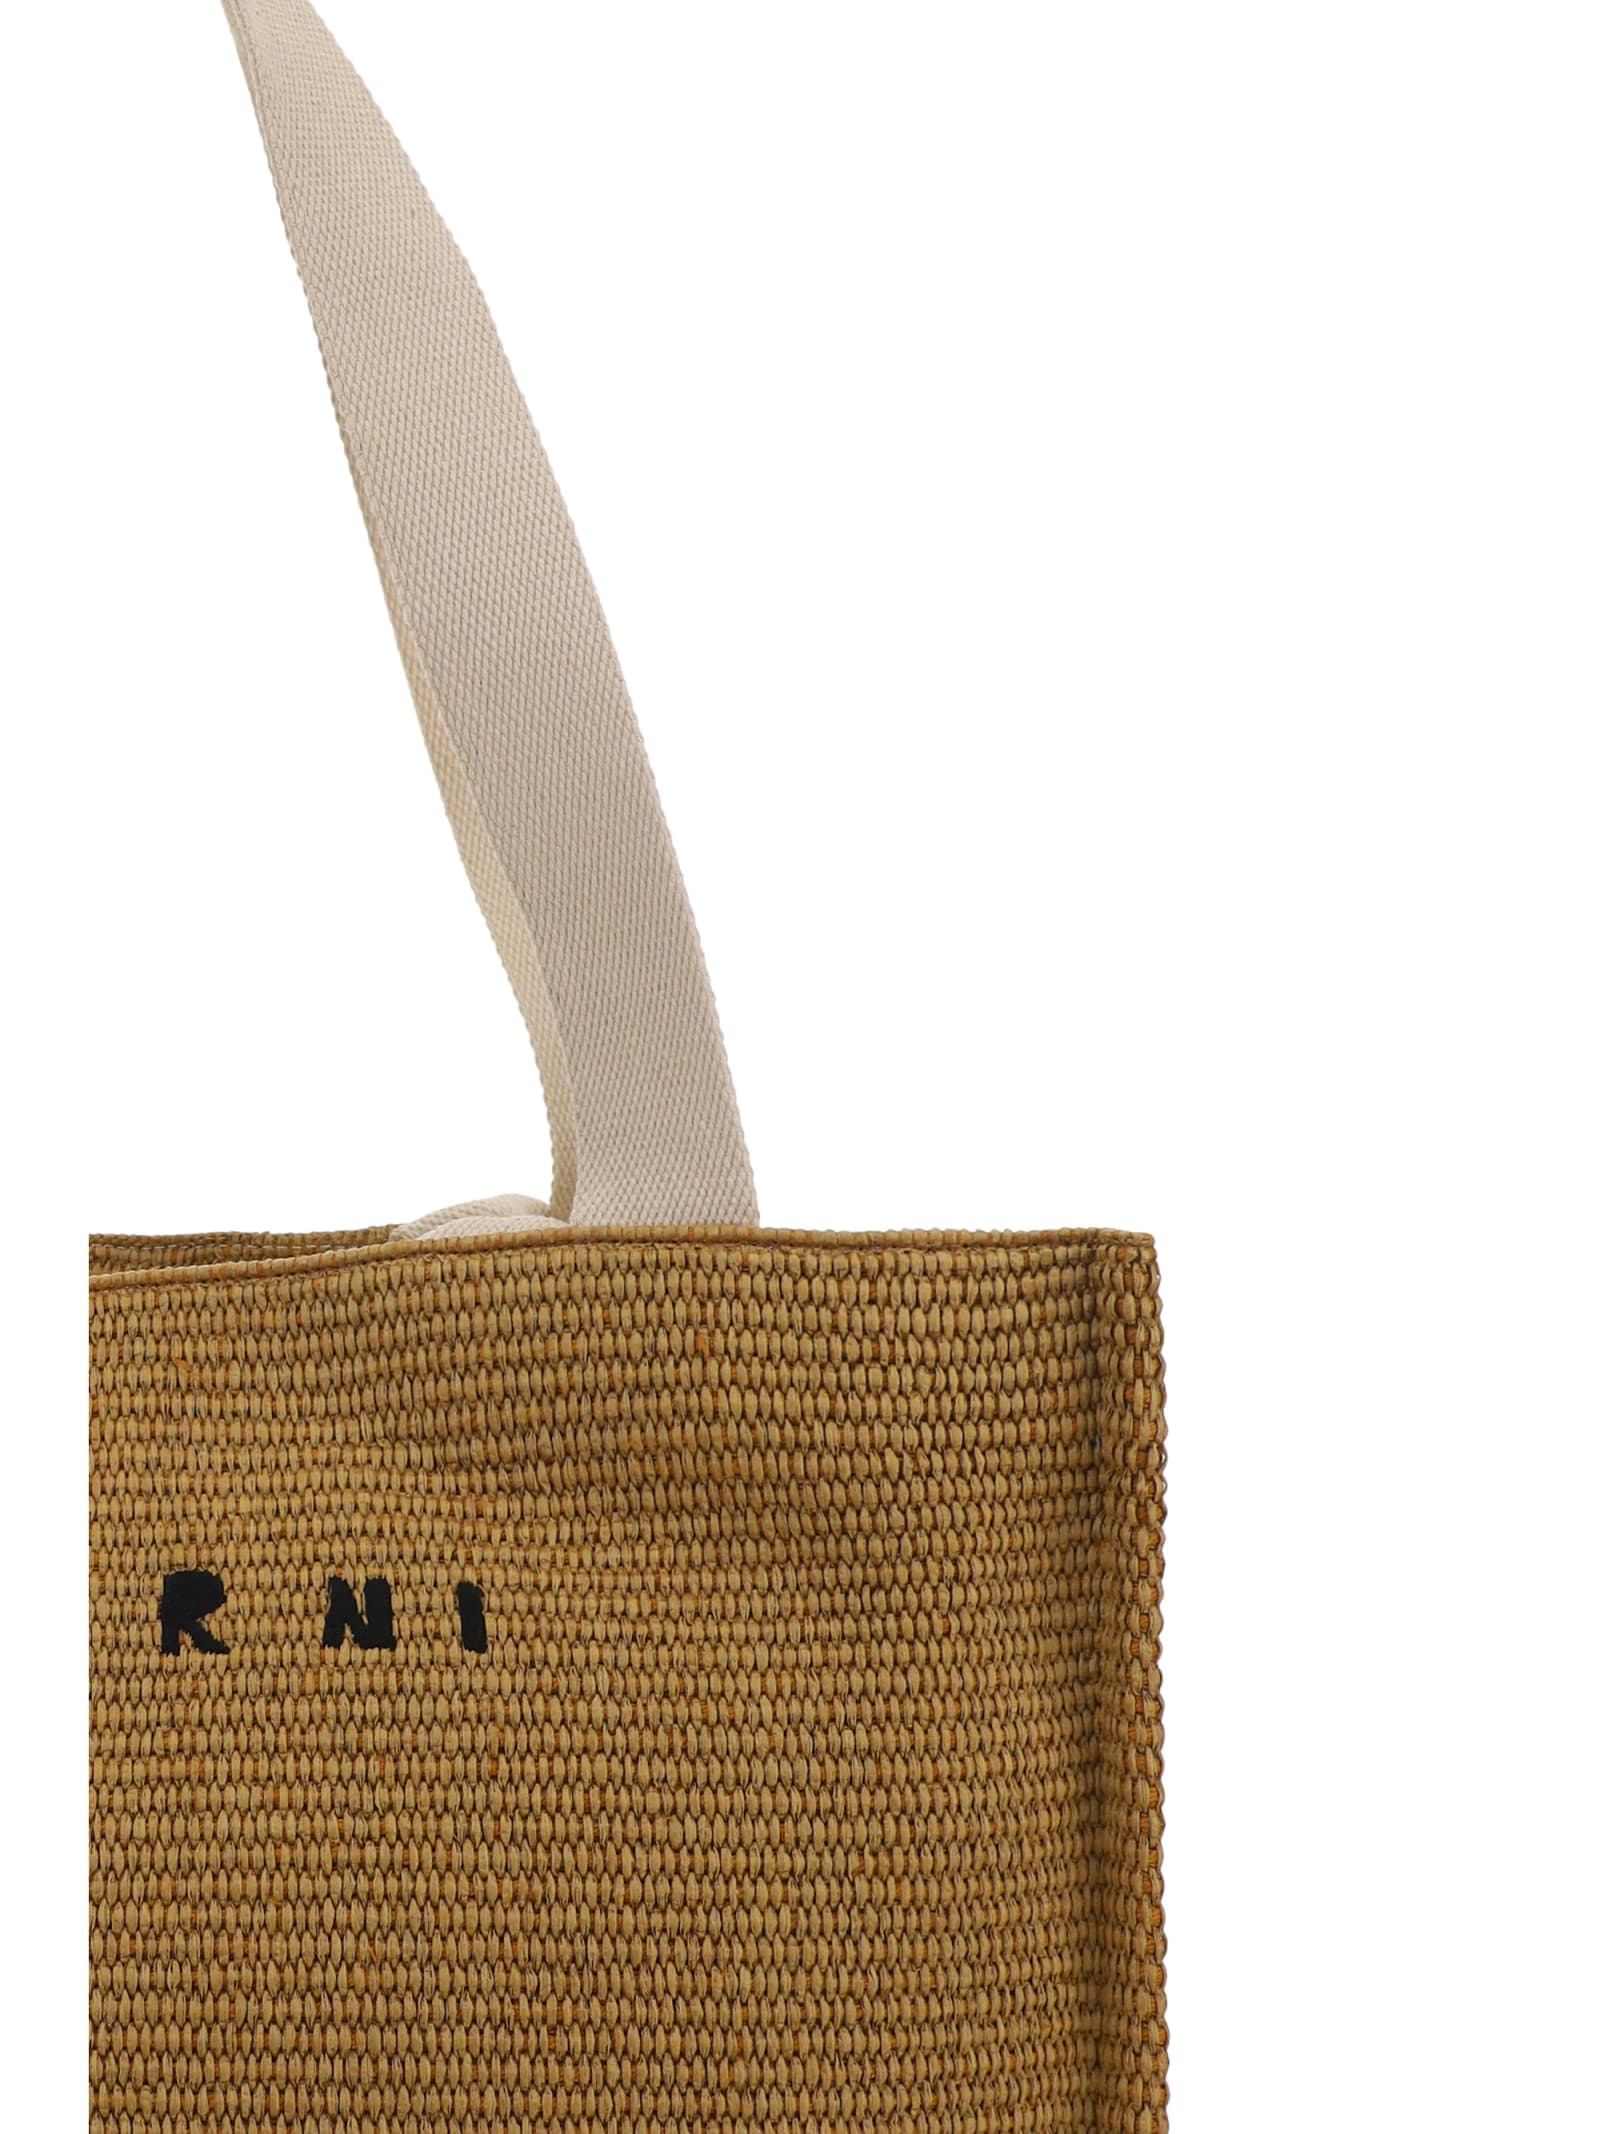 Shop Marni Tote Handbag In Brown